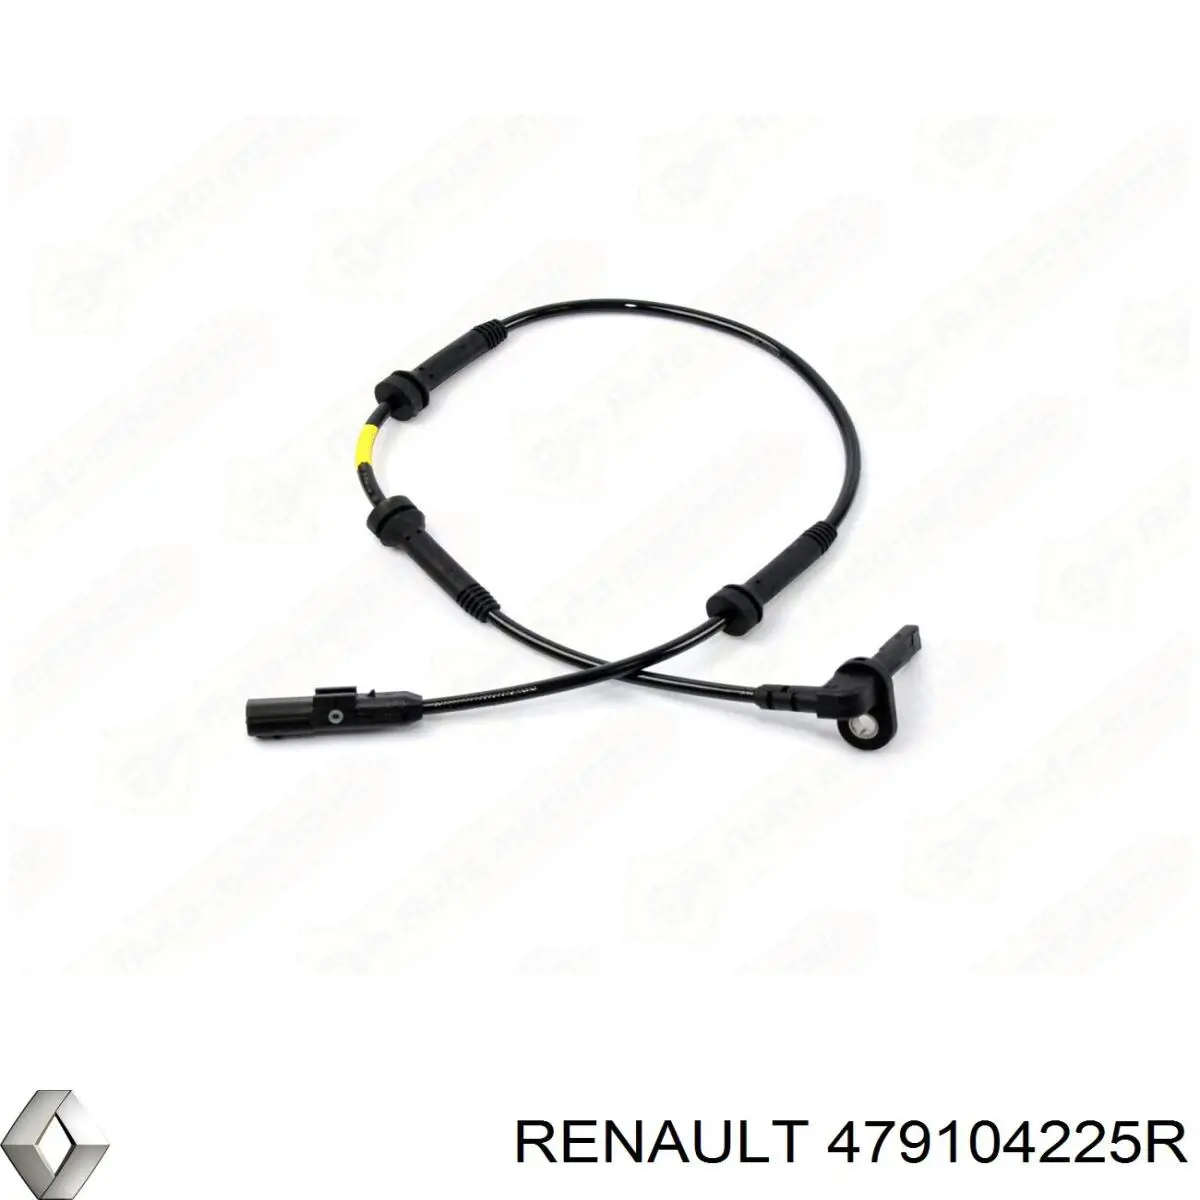 Sensor de freno, delantero para Renault LOGAN 